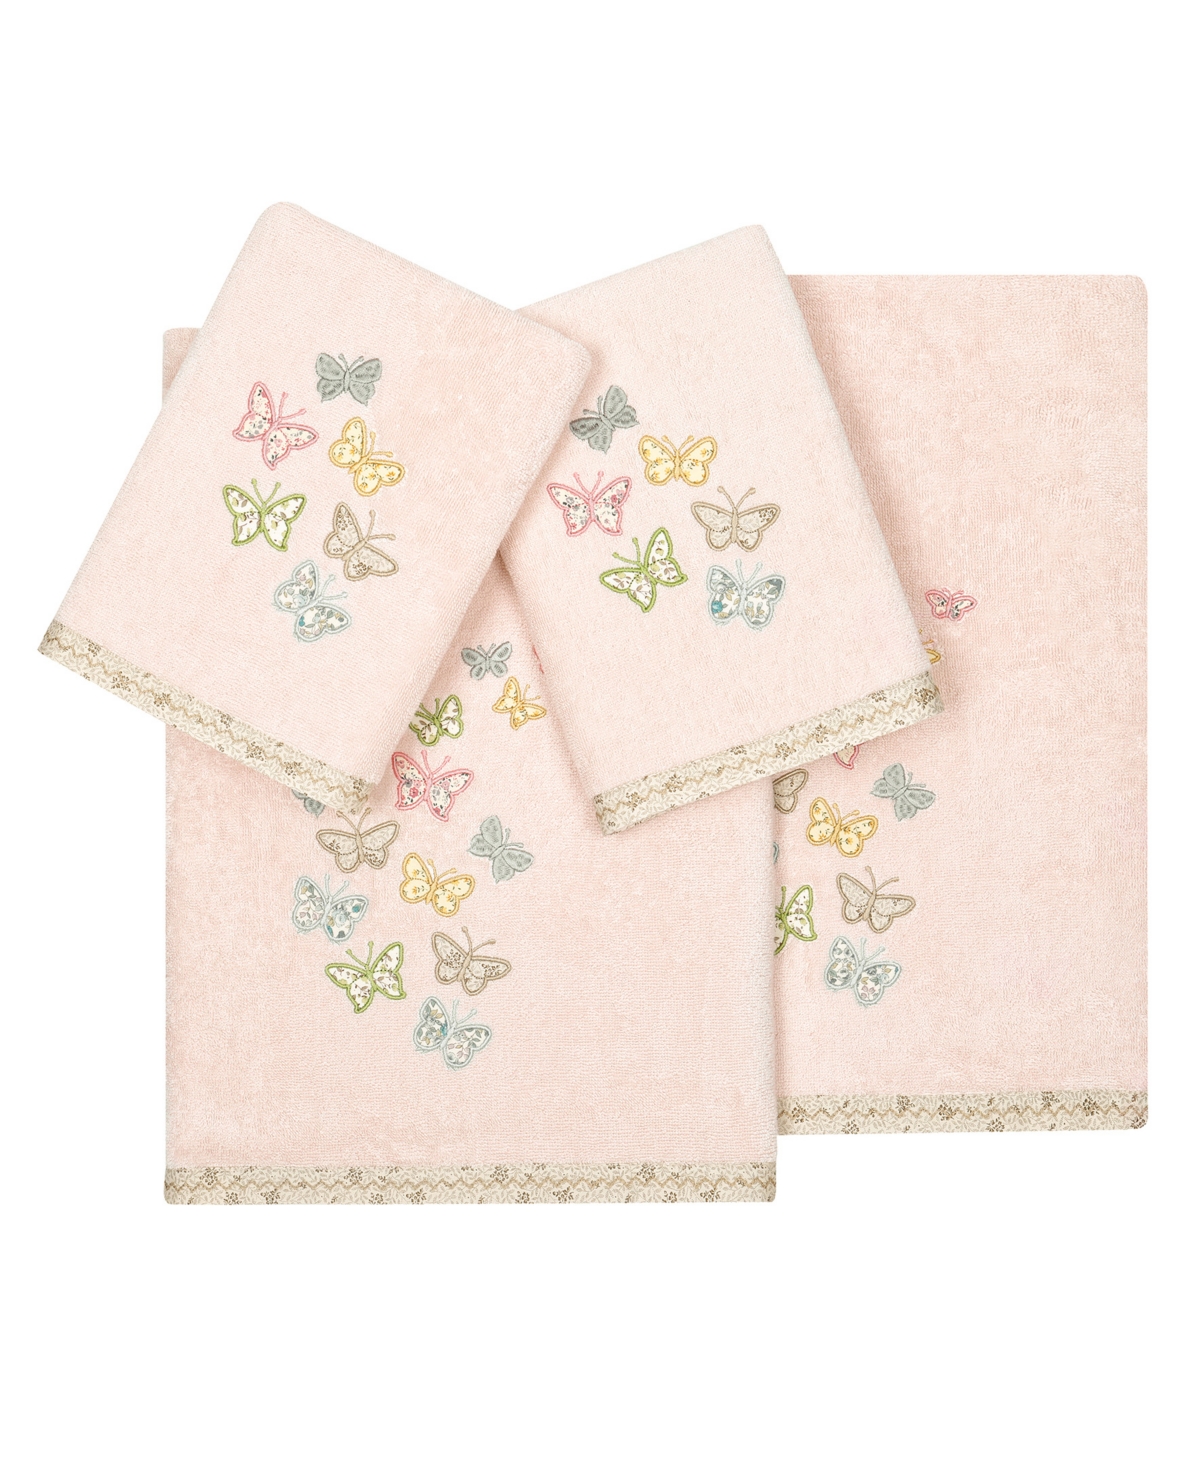 Linum Home Textiles Turkish Cotton Mariposa Embellished Towel Set, 4 Piece Bedding In Blush